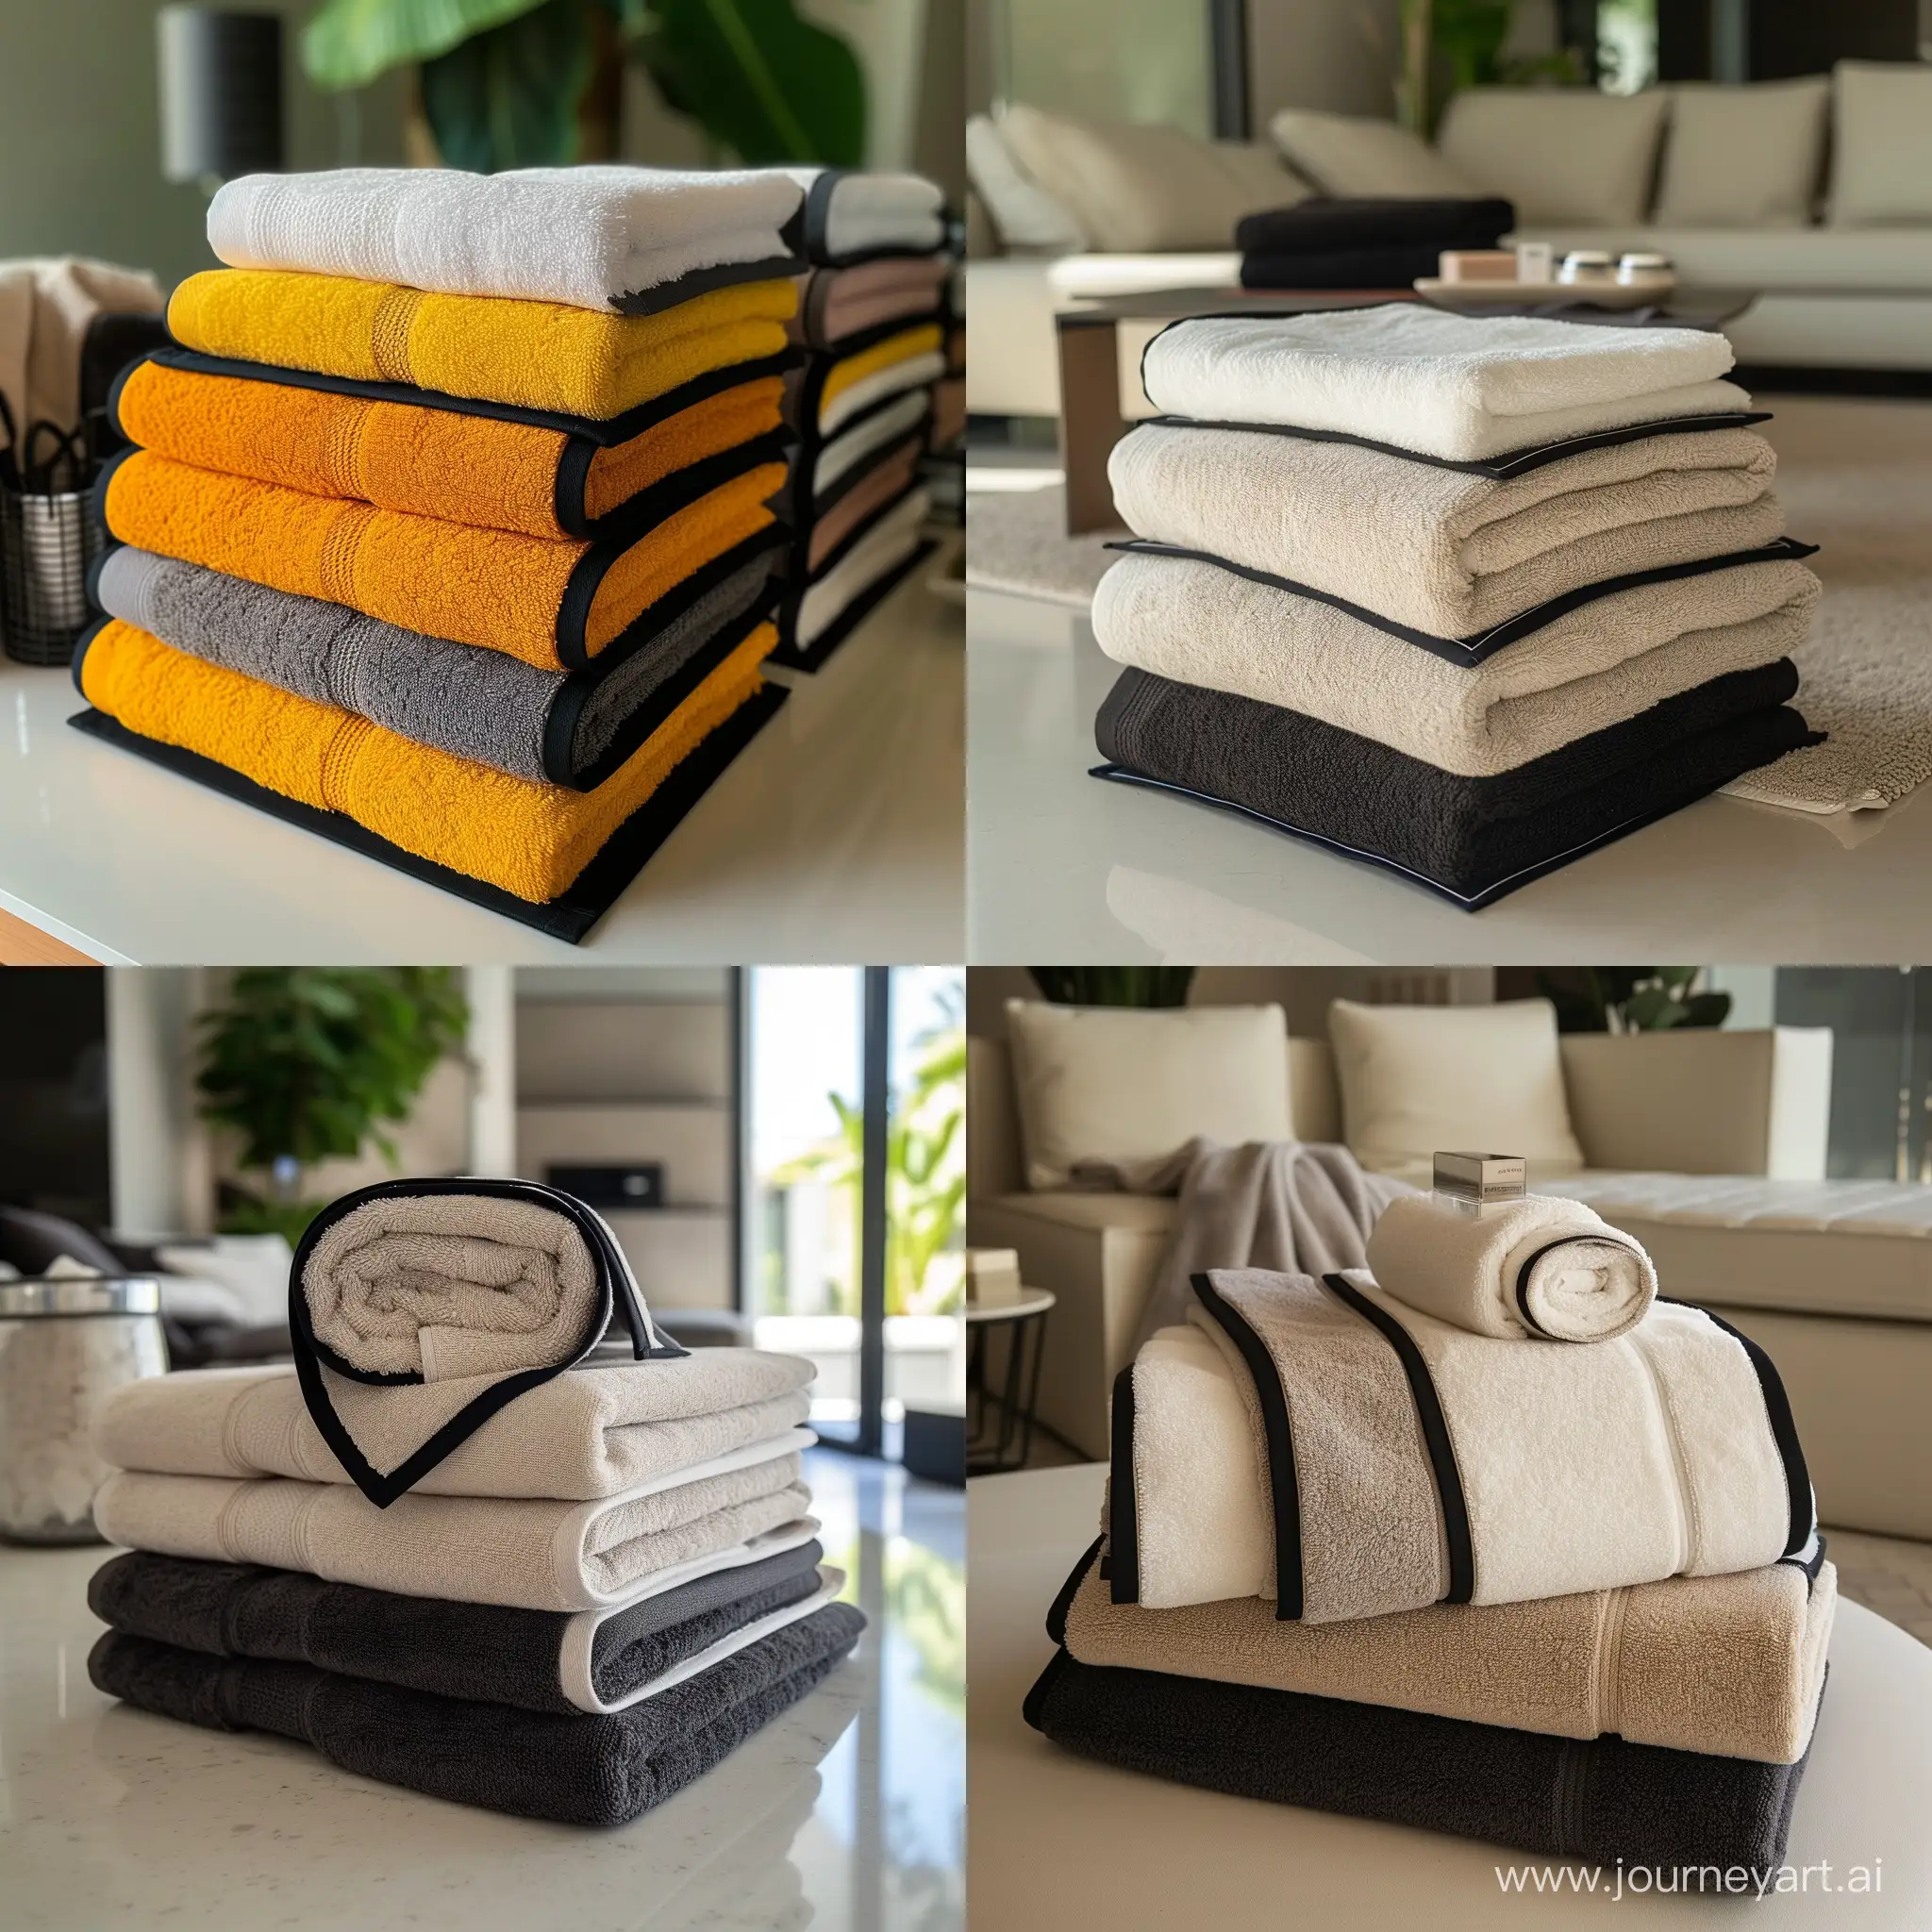 Luxurious-Monochromatic-Bath-Towels-with-Stylish-Black-Edges-Elegant-Gift-Set-in-a-Designer-Apartment